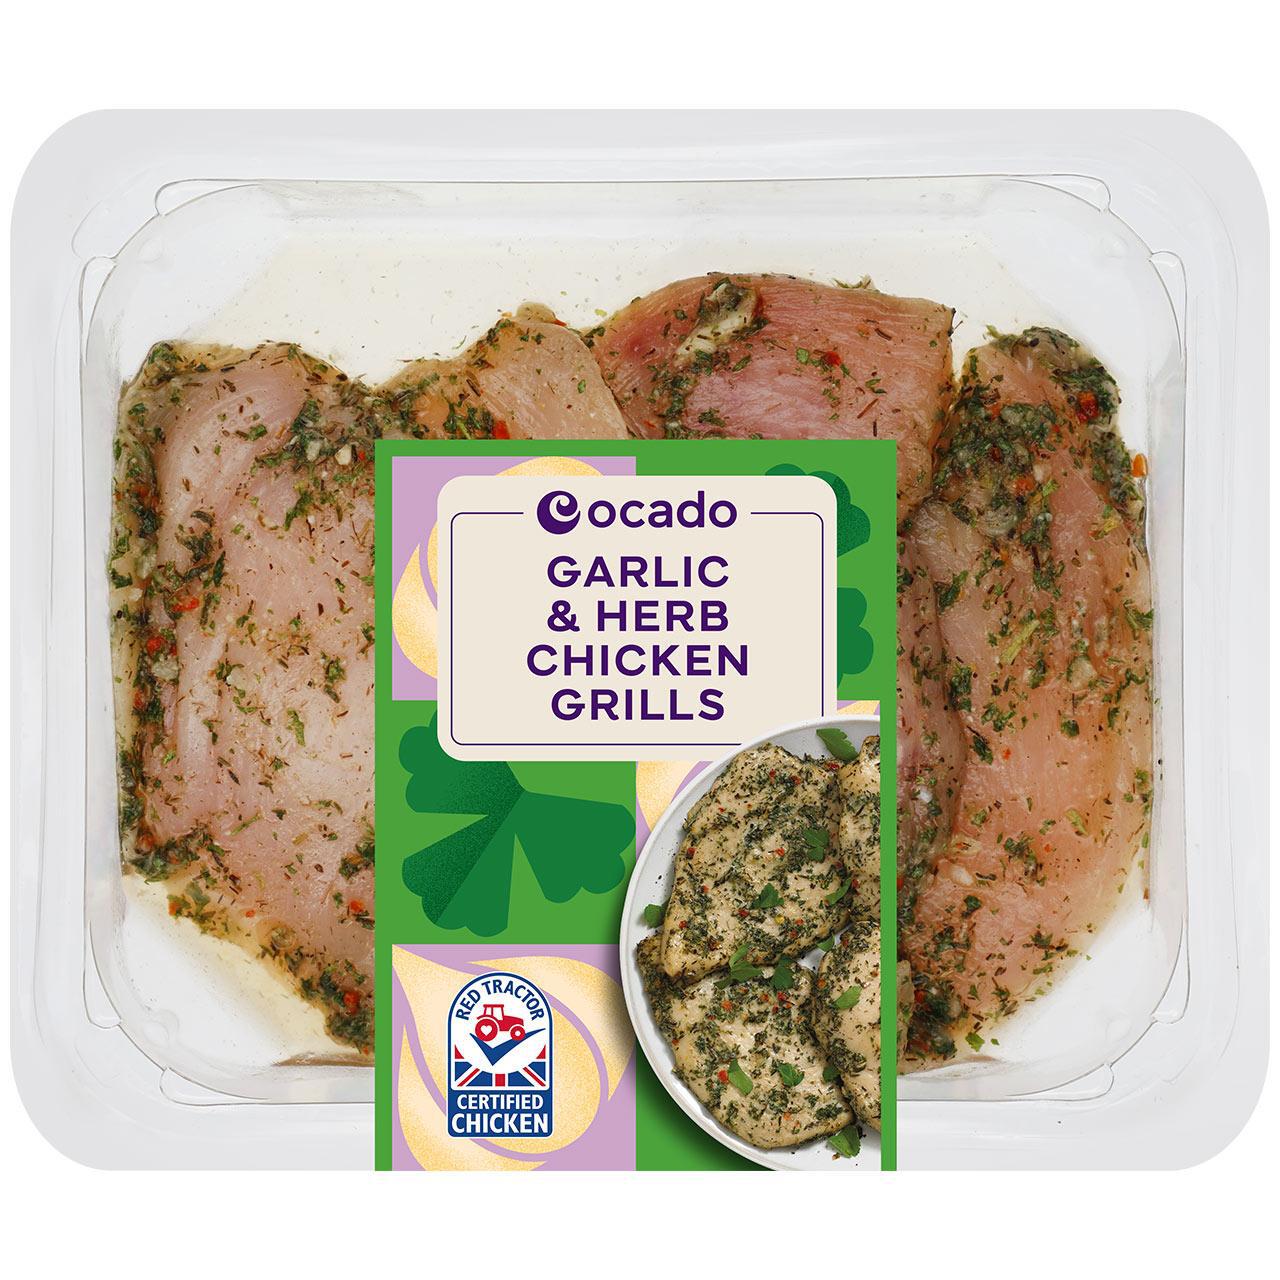 Ocado Garlic & Herb Chicken Grills 330g